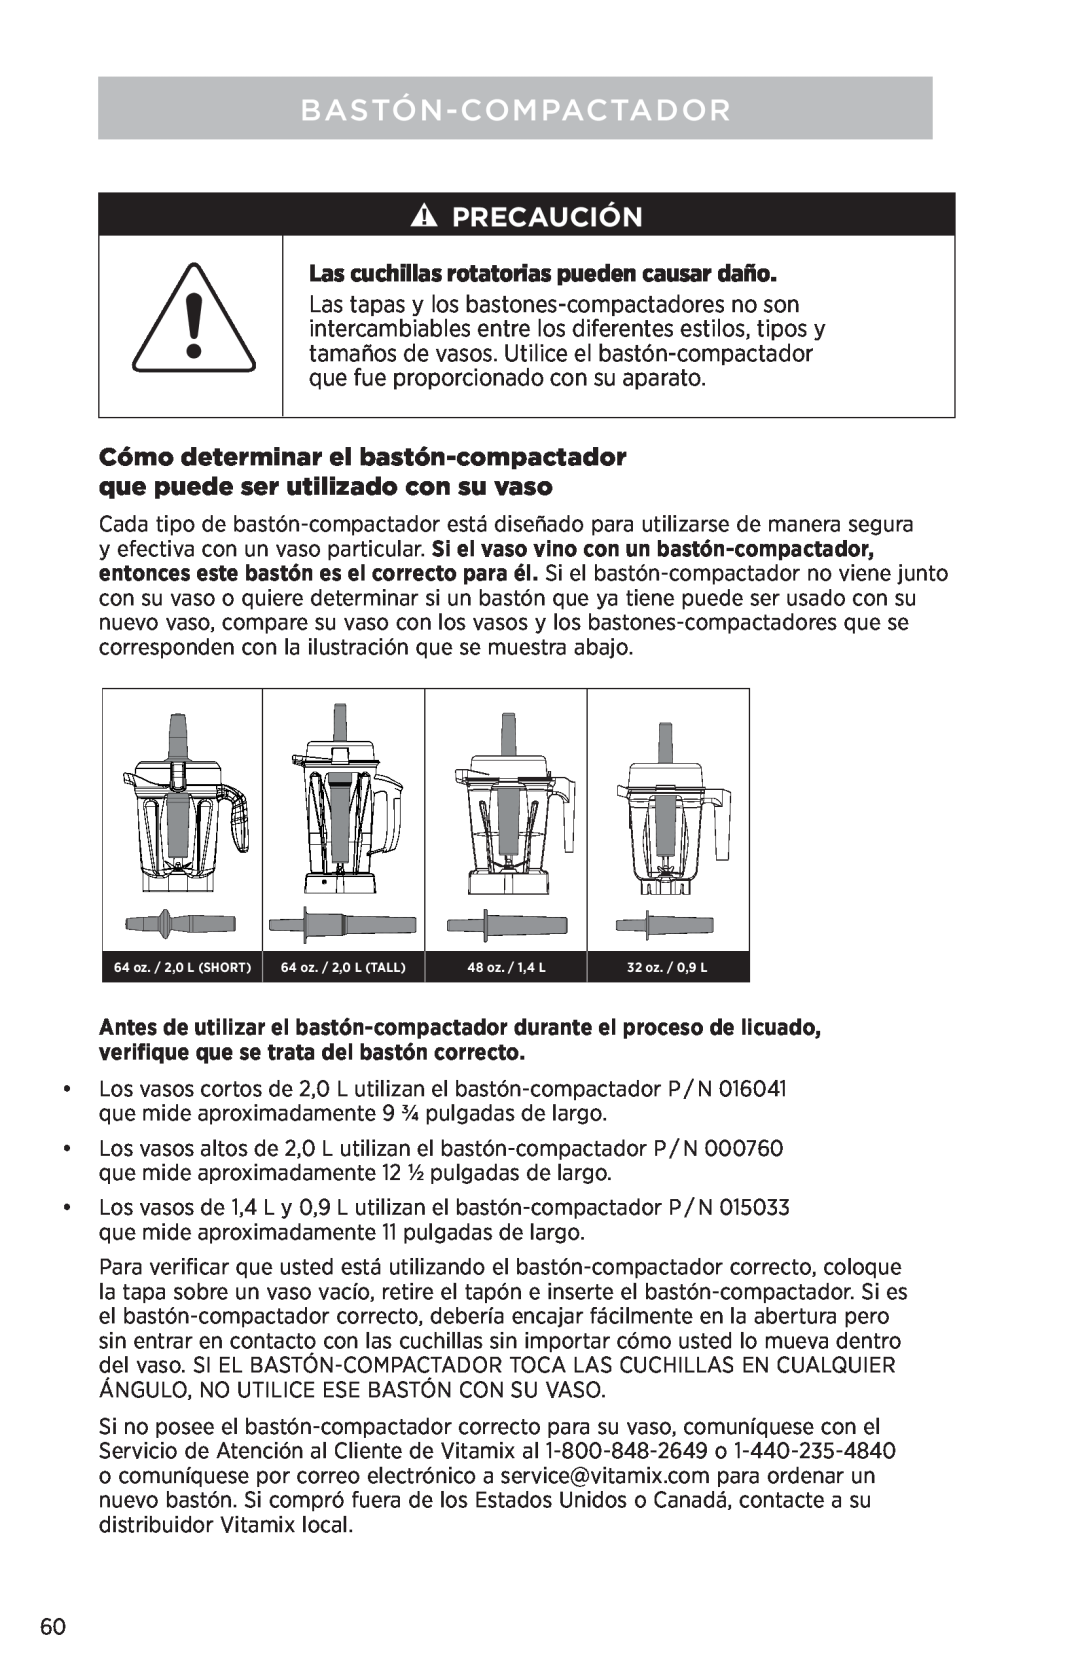 Vita-Mix PROFESSIONAL SERIES 750 manual Bastón-Compactador, Las cuchillas rotatorias pueden causar daño, Precaución 